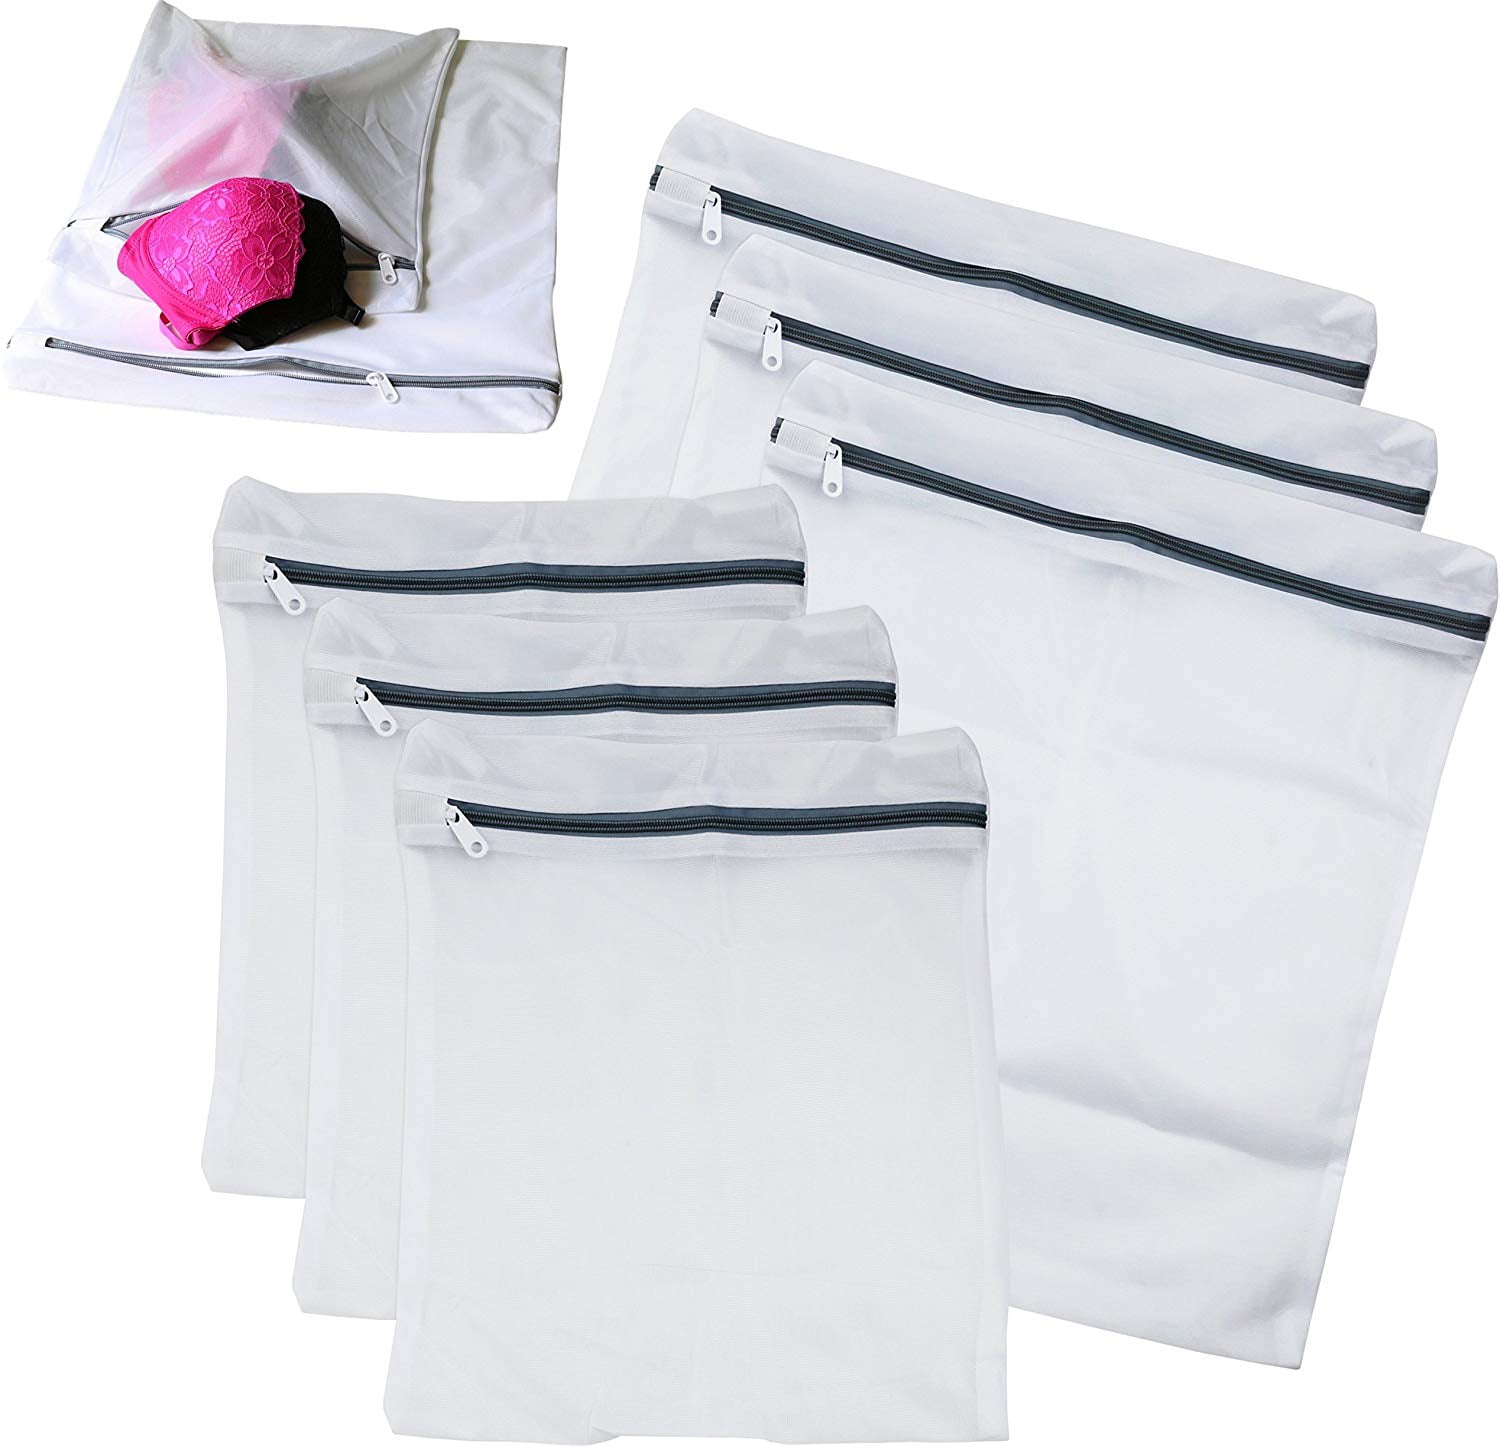 Mesh Laundry Bags Zipped Wash Bag Underwear Bra Lingerie Travel Organizer 